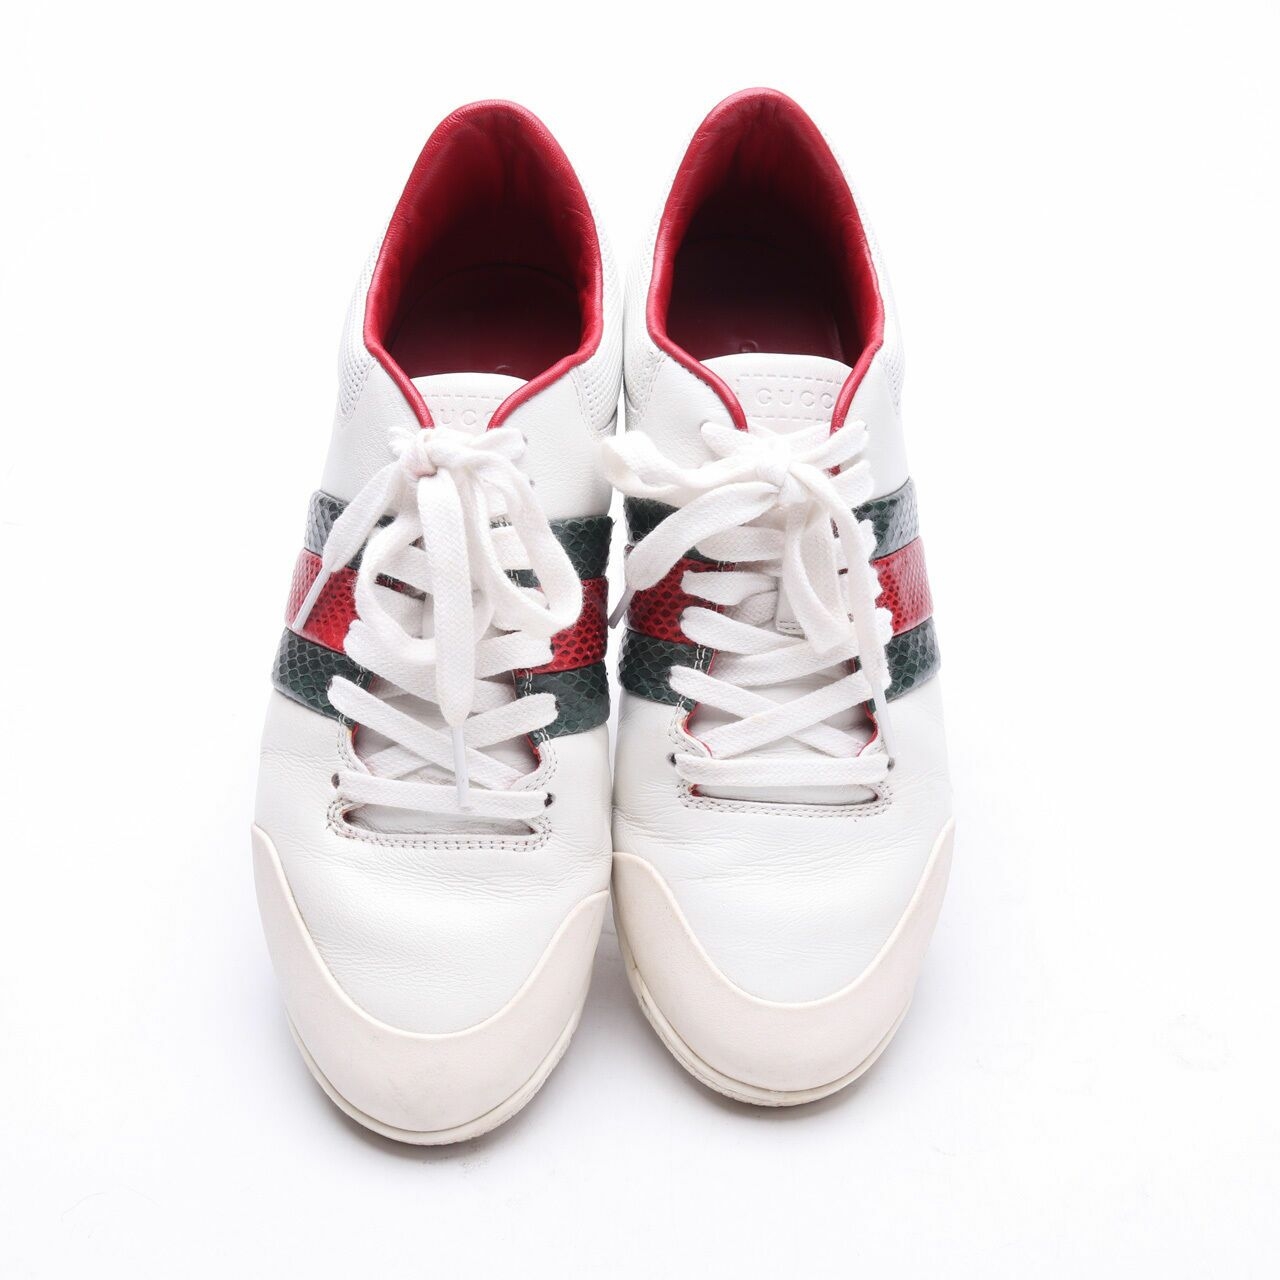 Gucci White Green Red Stripe Sneakers